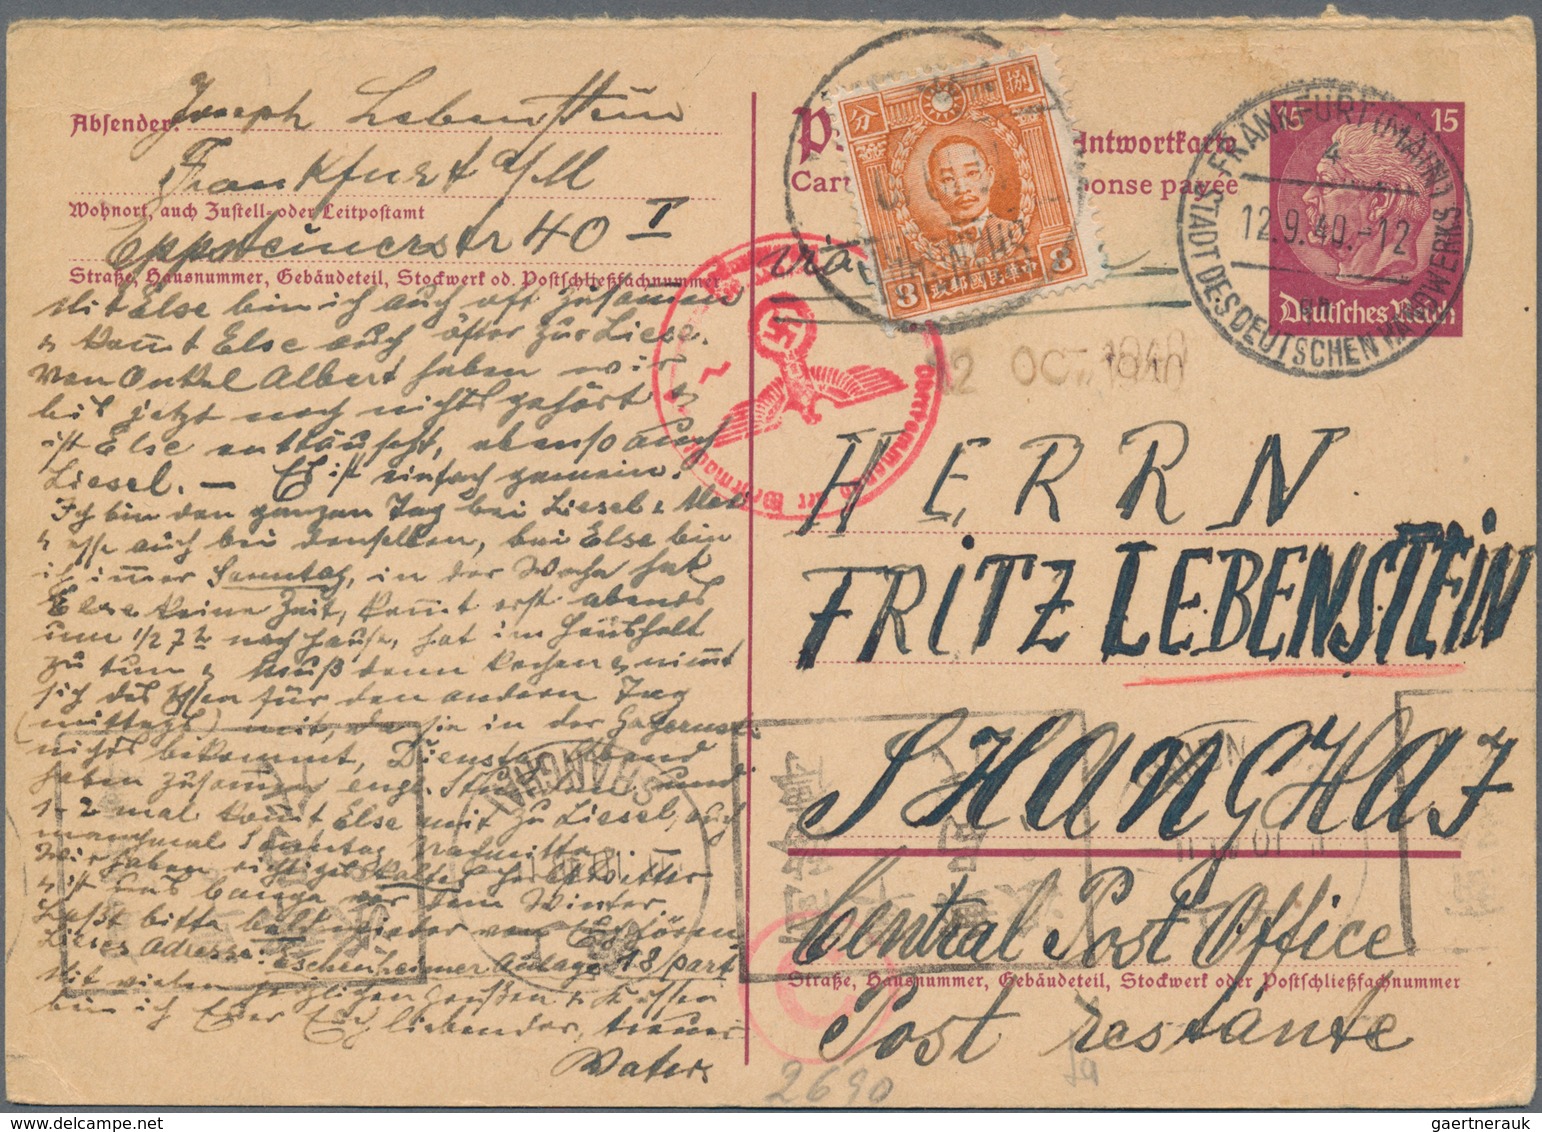 China: 1940/41, the Joseph Lebenstein (Berlin 1872-1944 Theresienstadt/Terezin) correspondence to Ch